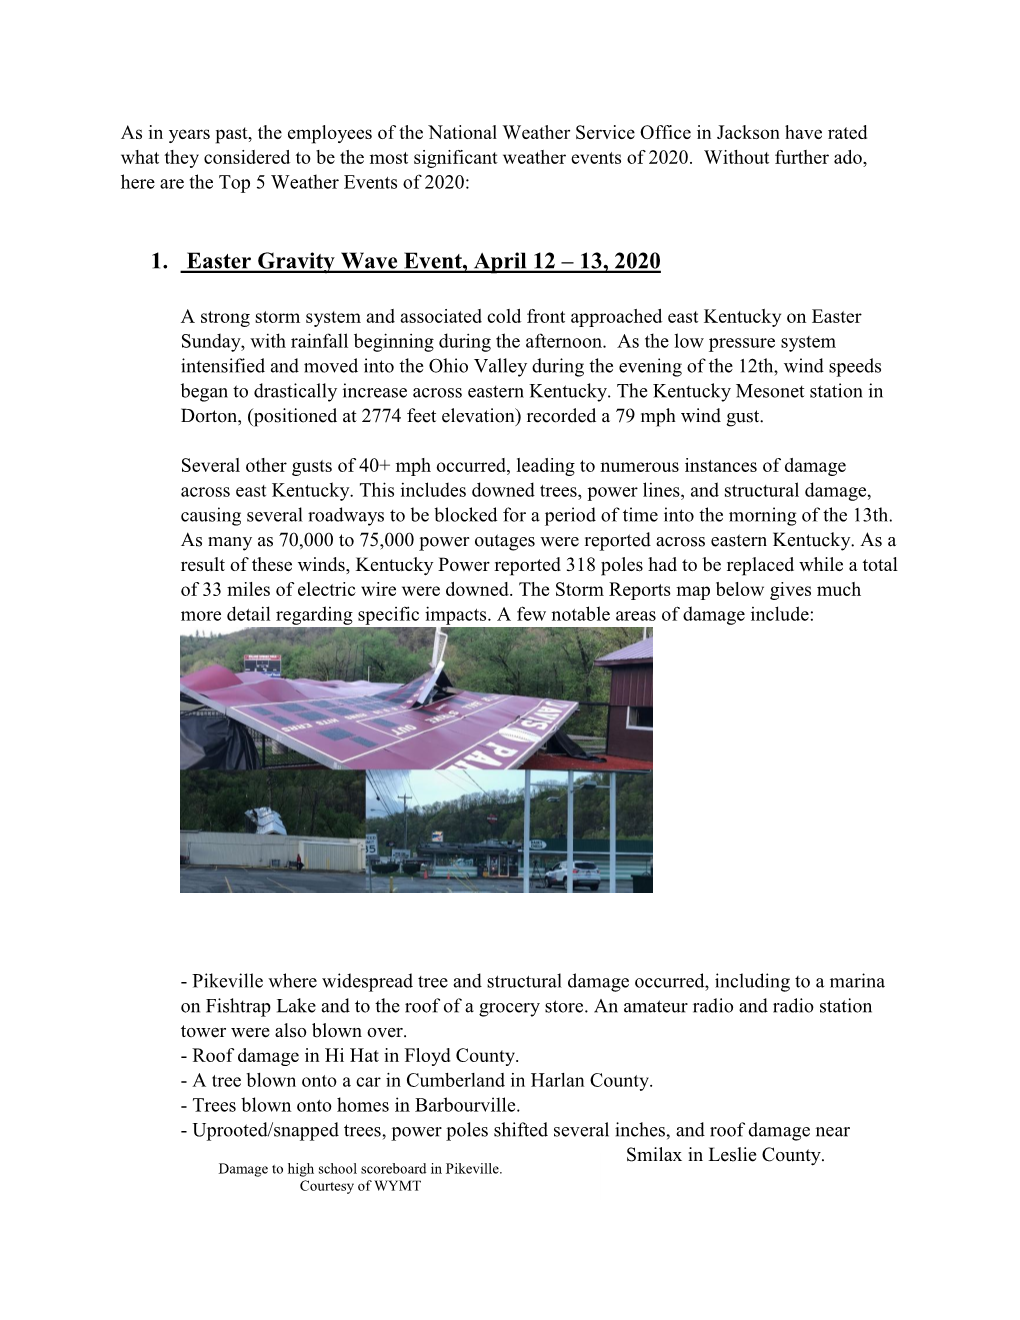 1. Easter Gravity Wave Event, April 12 – 13, 2020